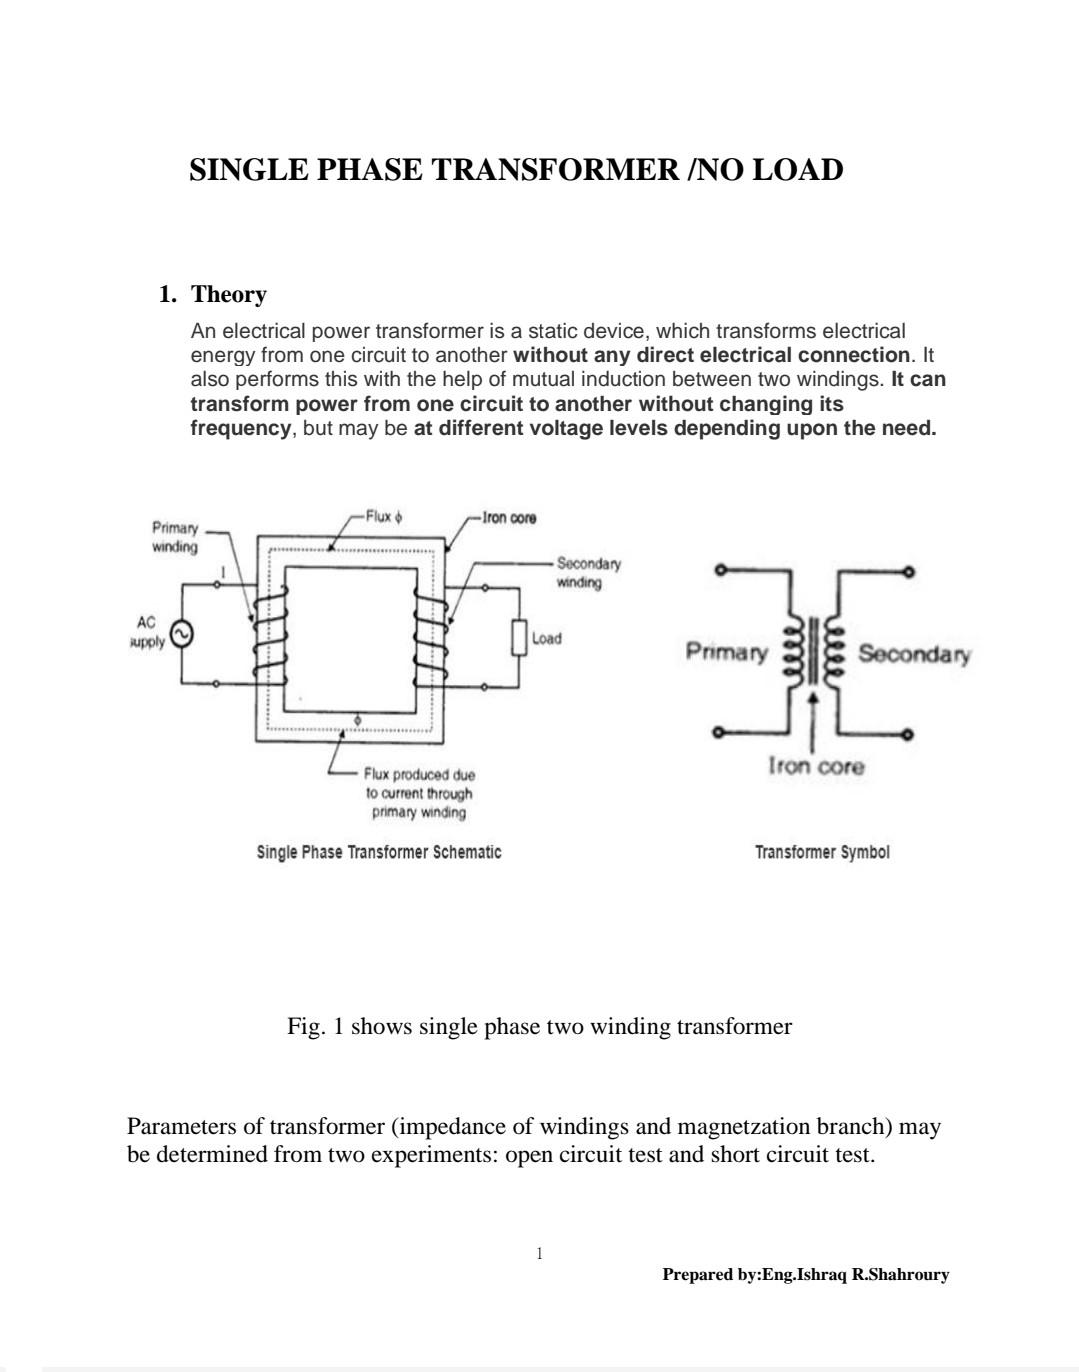 Transformer Basics and Transformer Principles